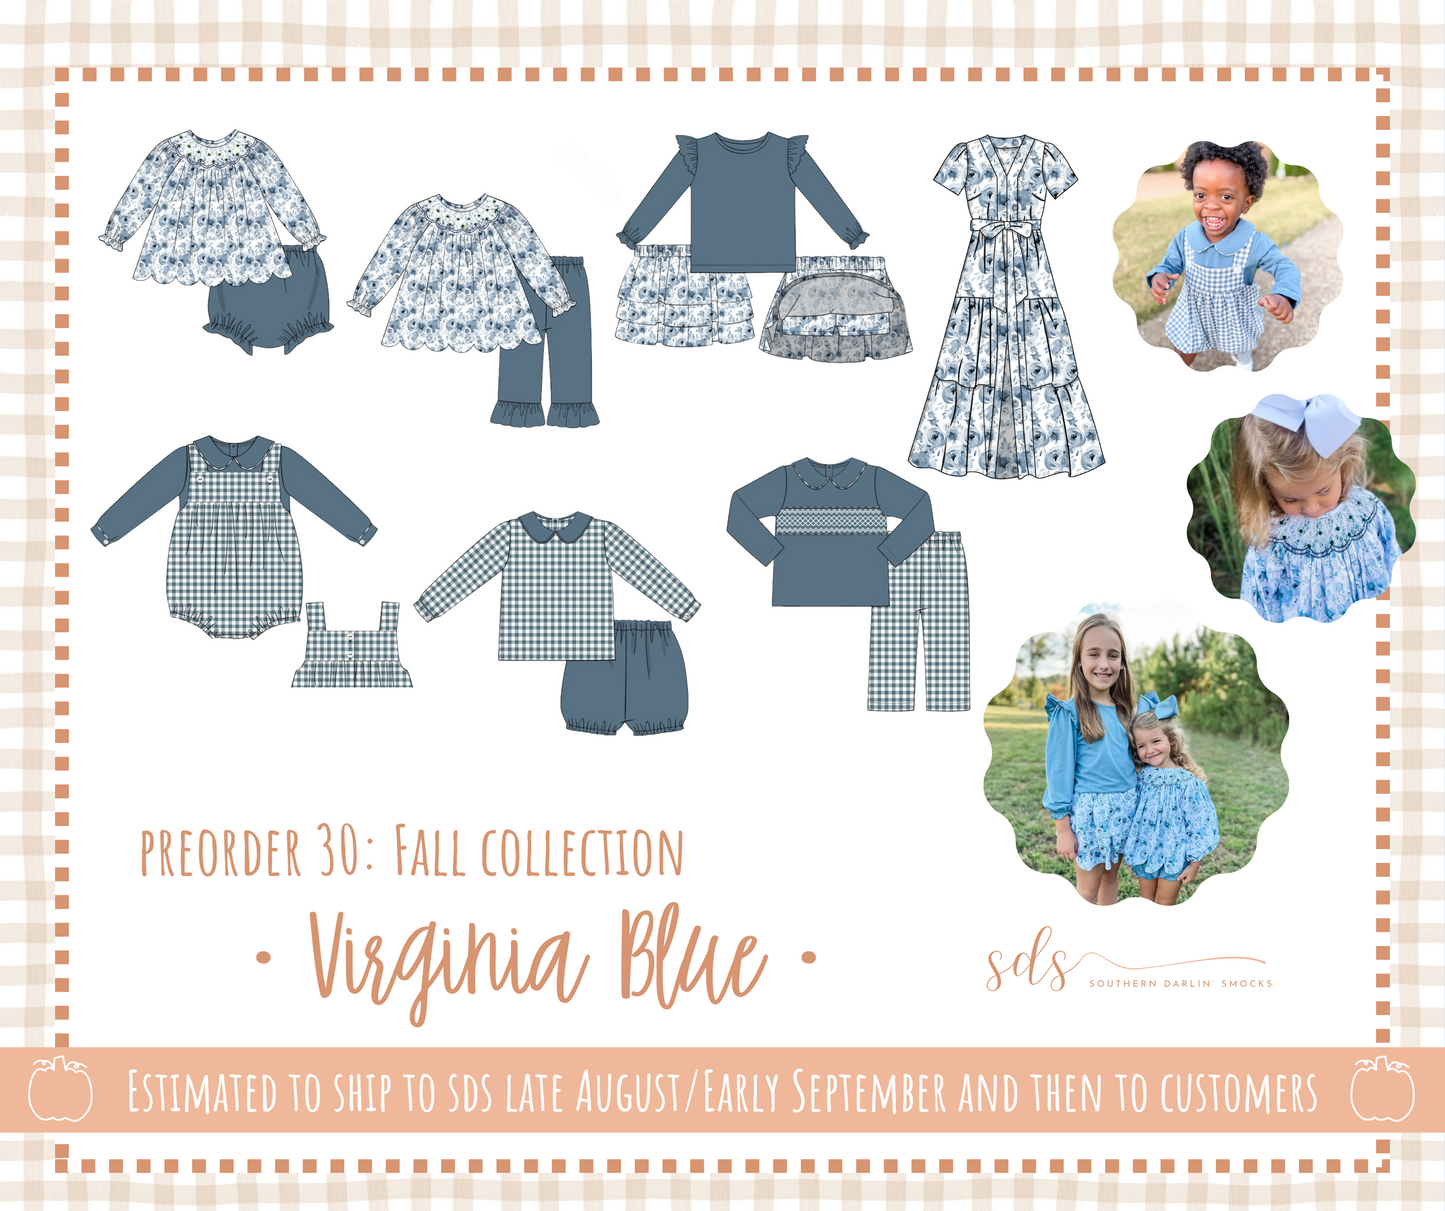 PREORDER 30: FALL COLLECTION - Virginia Blue Mom Dress